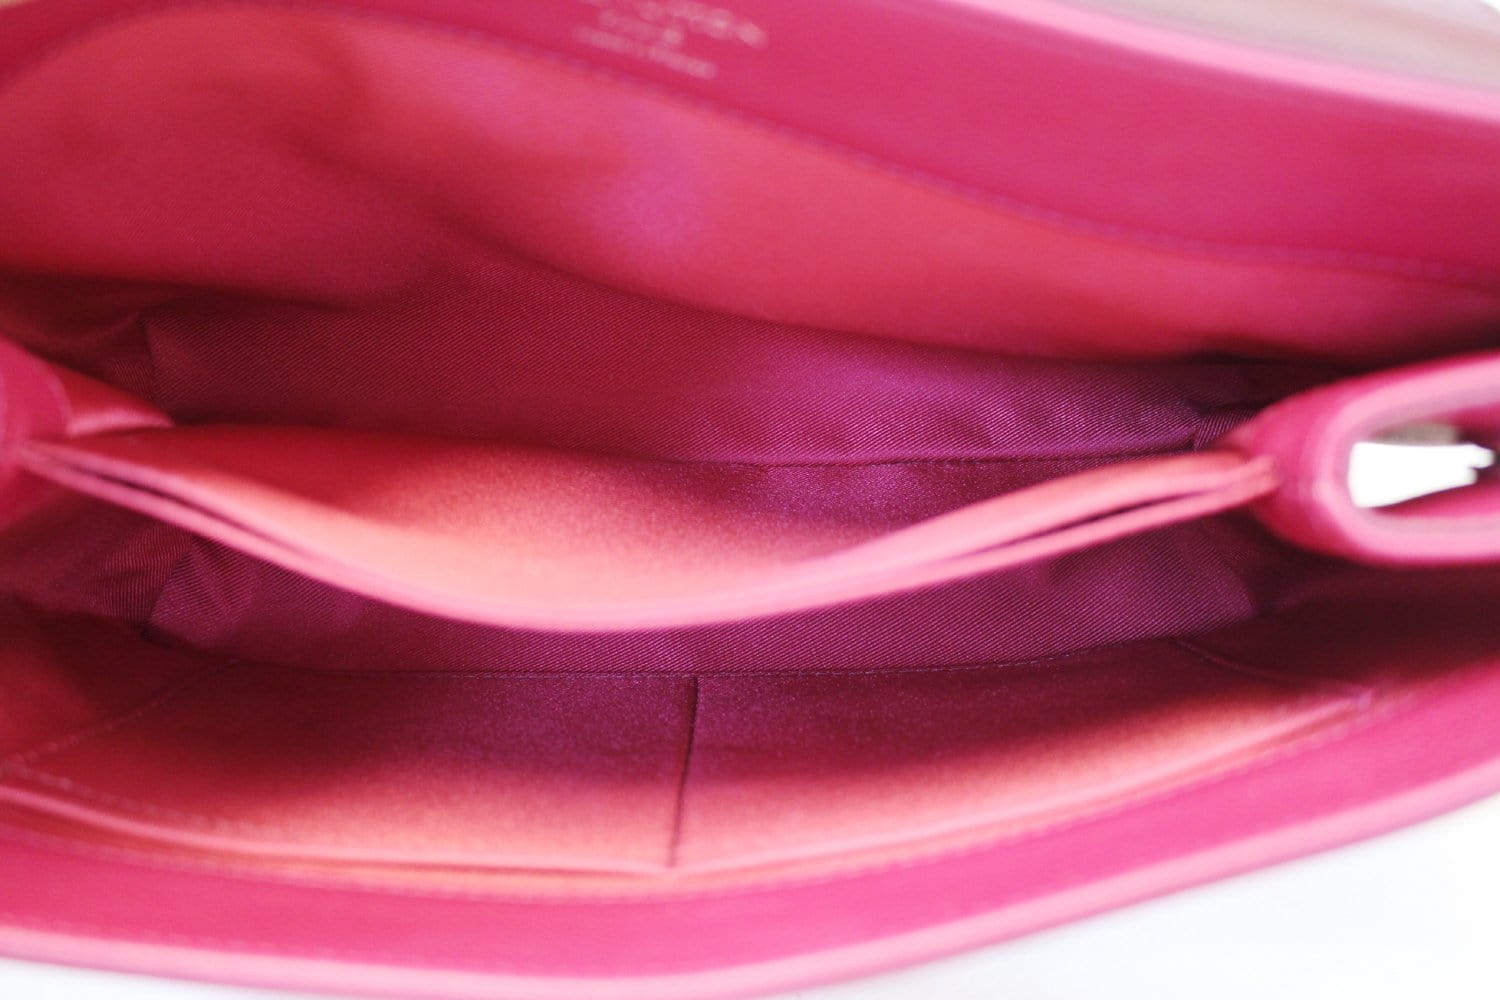 Louis Vuitton Lockme Chain Bag in Pink